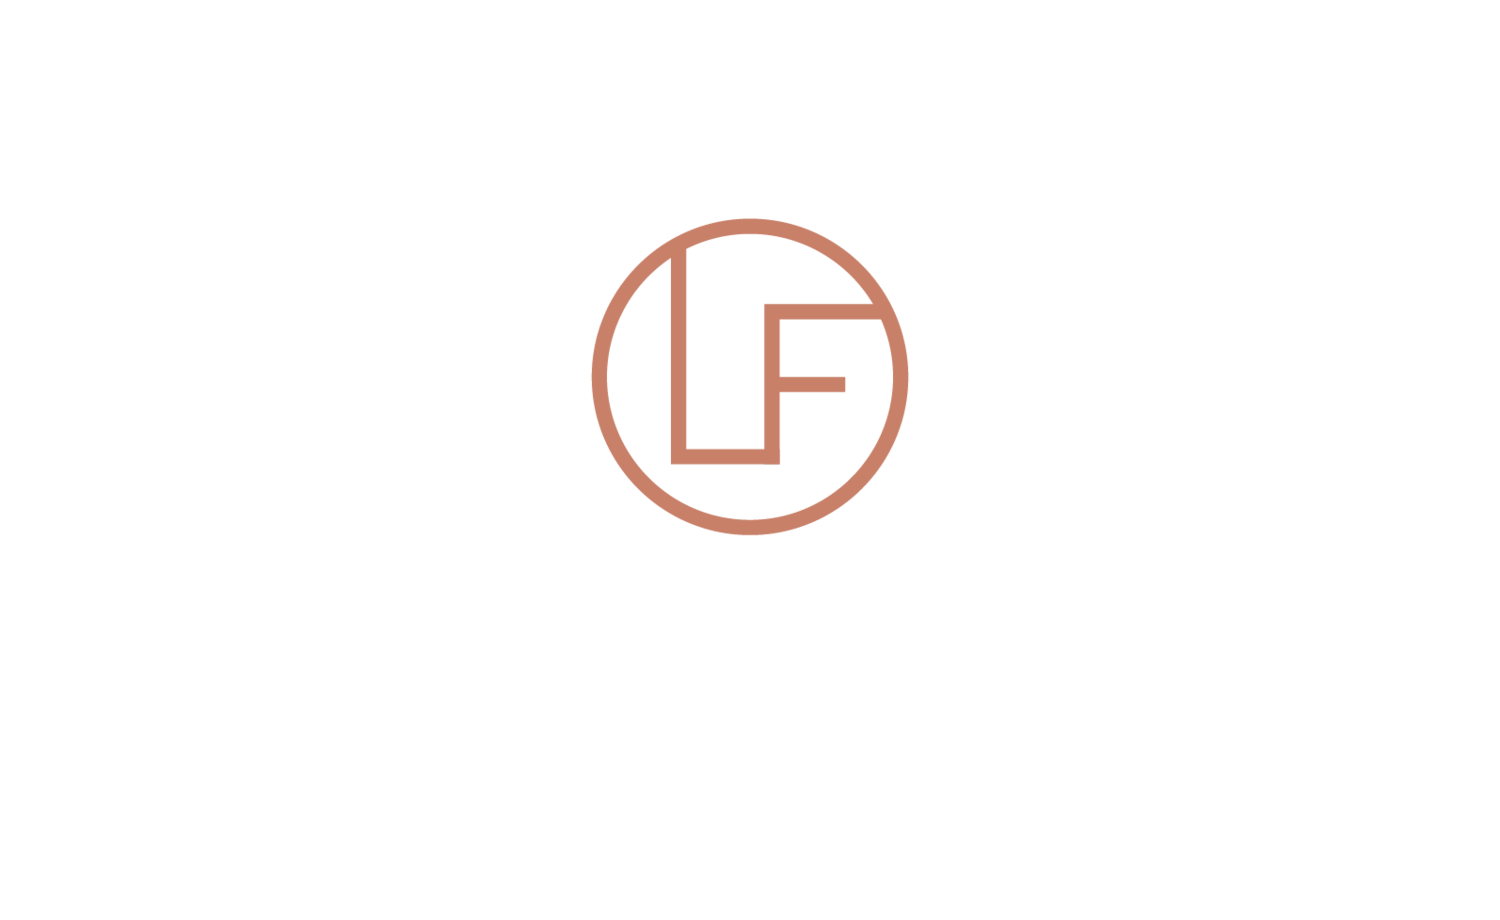 Live Life Fuller